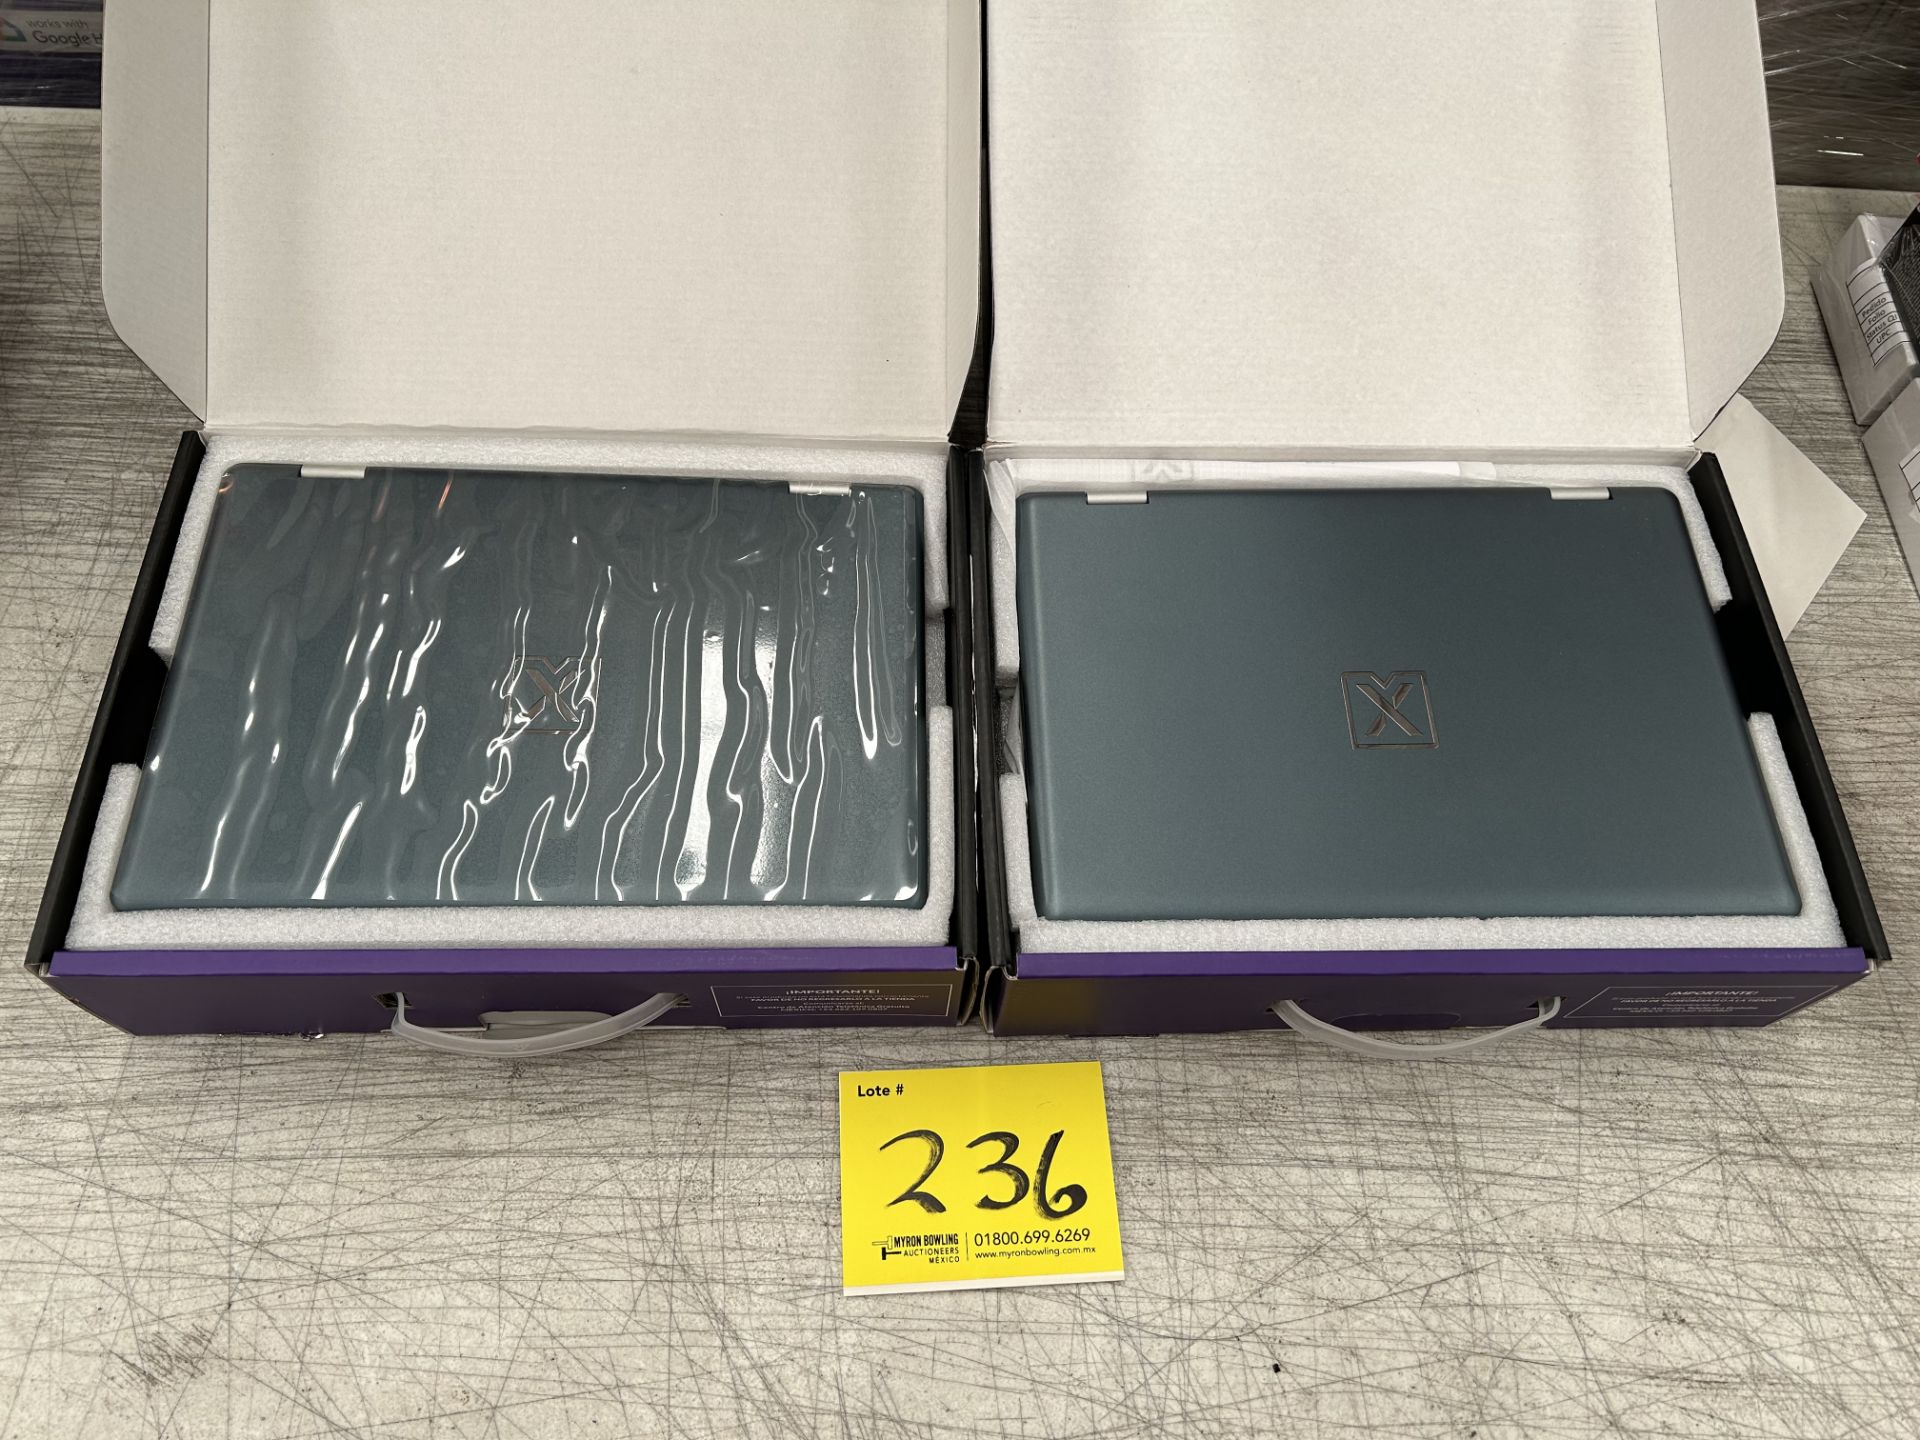 Lote de 2 laptops contiene: 1 laptop Marca LANIX, Modelo NEURON FLEX, 128 GB de almacenamiento, RAM